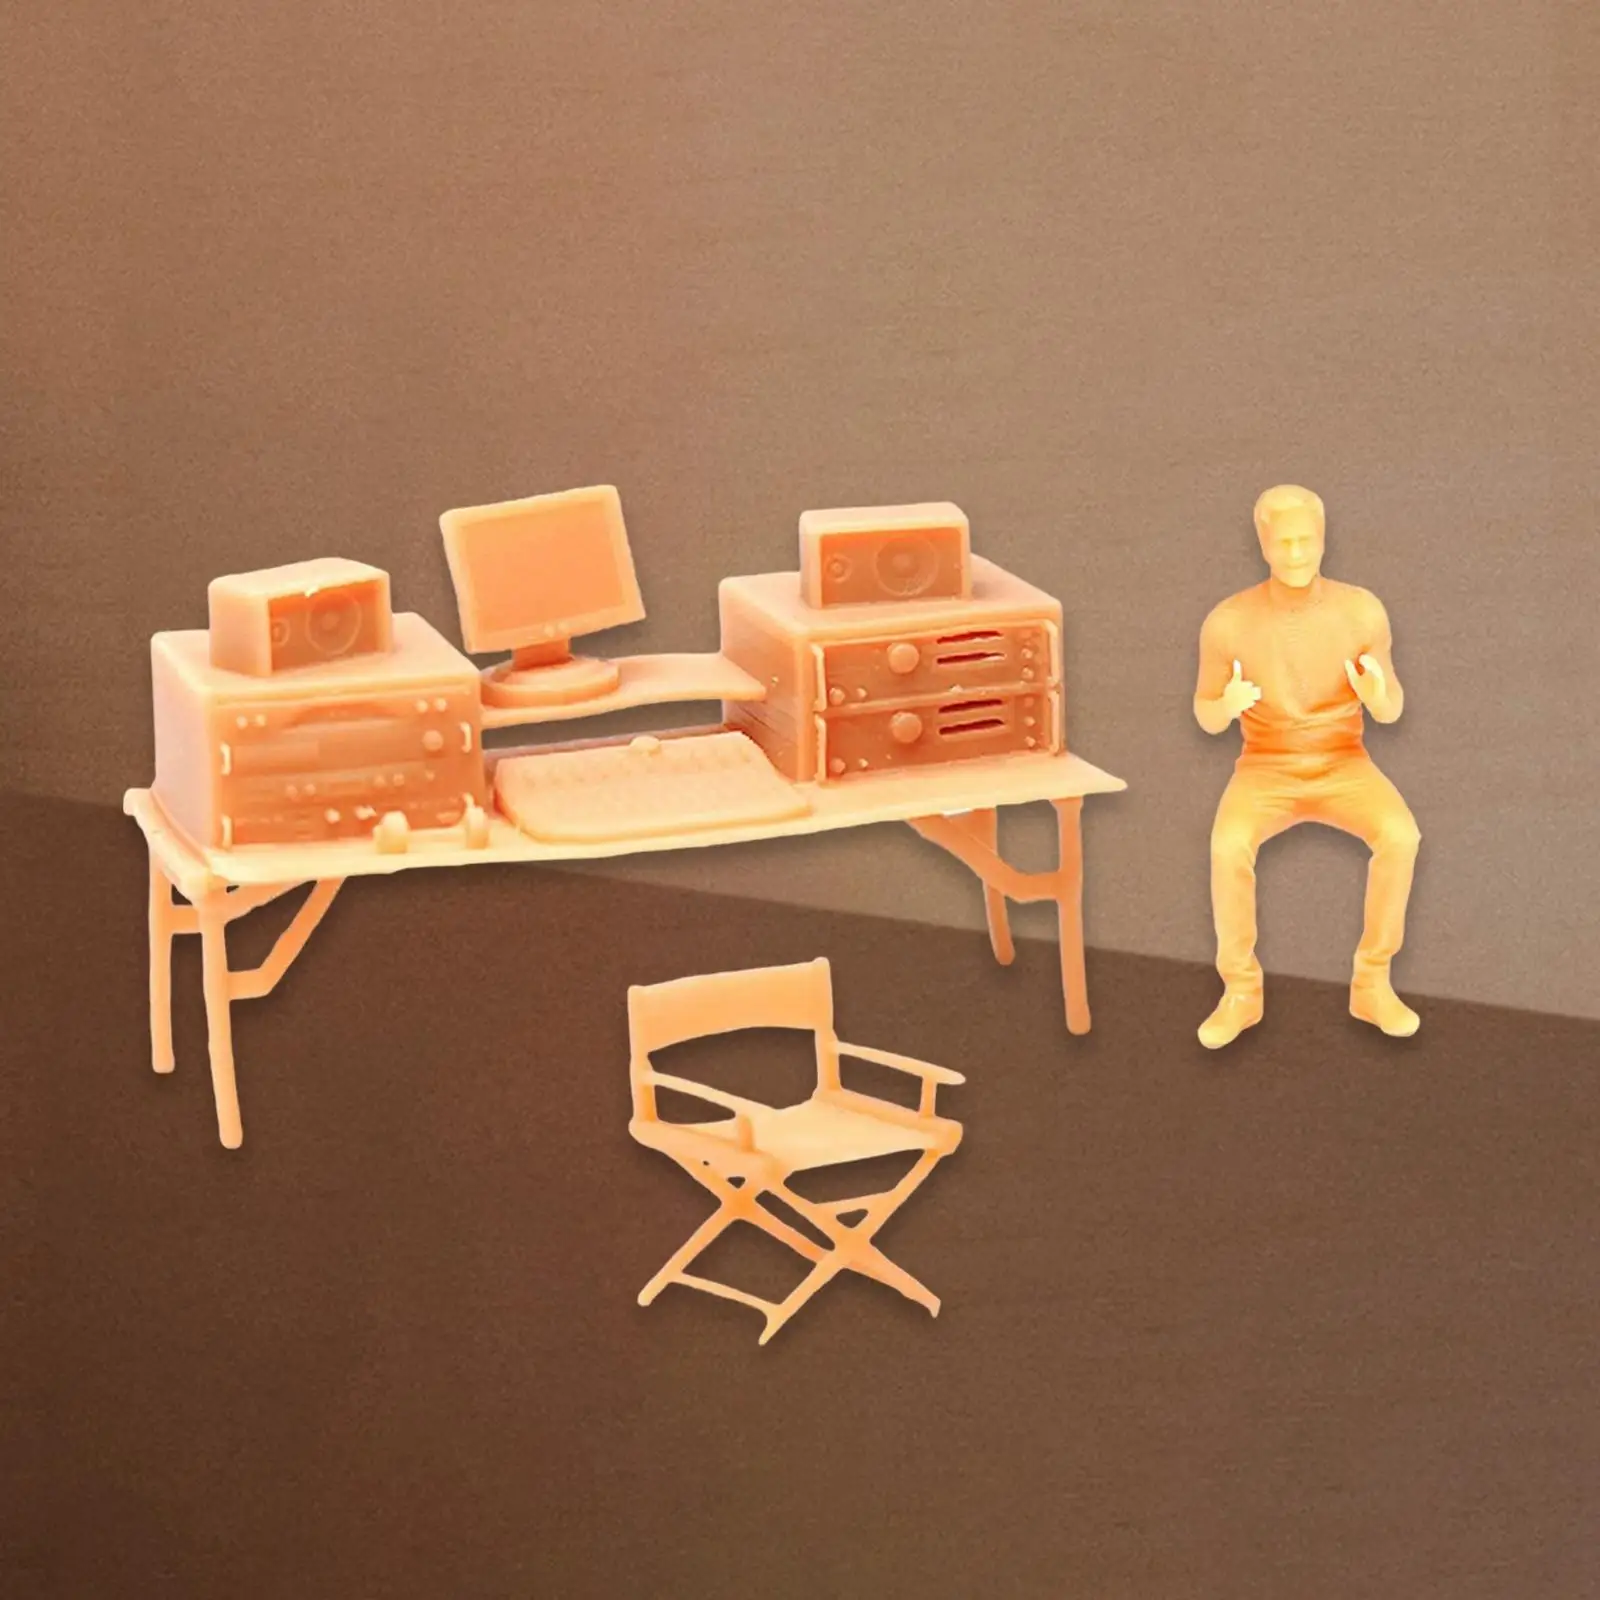 1:64 Scale Realistic People Figures Mini People Model Desk Model Tiny People Chair Model for Diorama Miniature Scenes